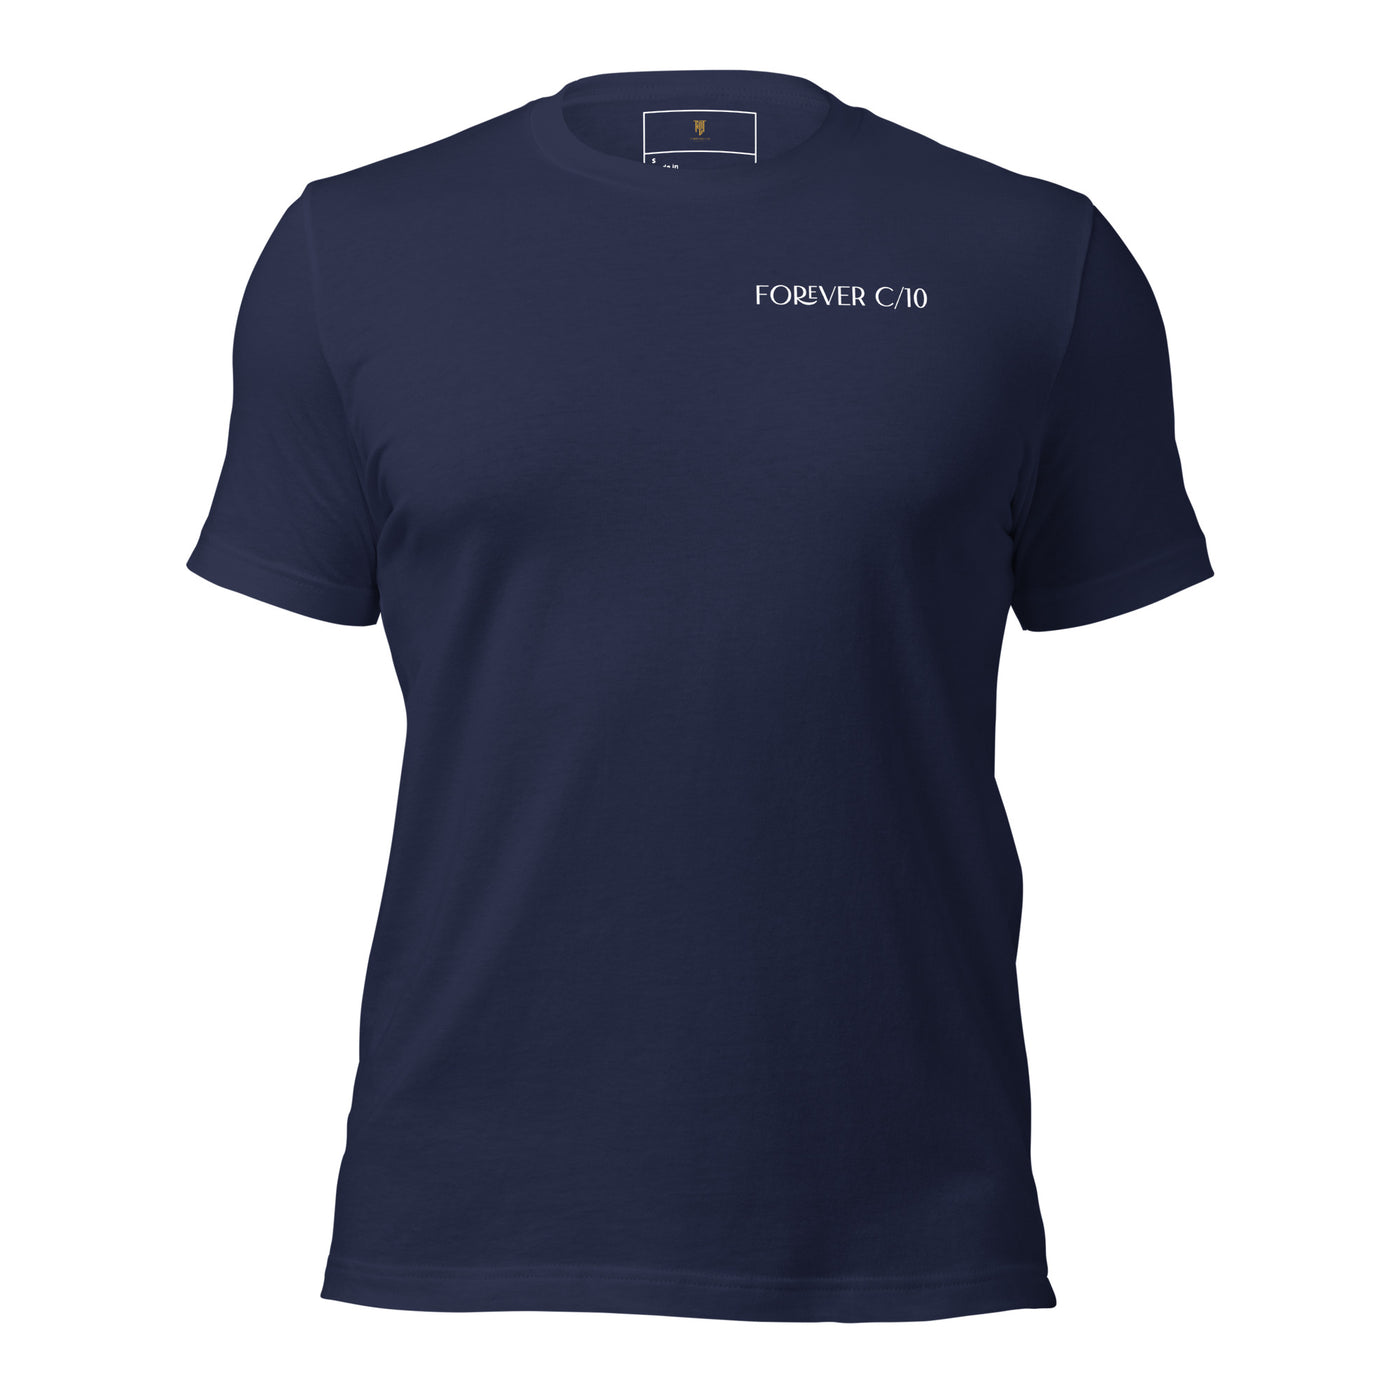 Gen 3 Two-Faced Unisex T-shirt (Back Print); Best Unisex C10 T-shirt, Unique Unisex C10 T-shirt, Gender Neutral C10 T-shirt Options, Best C10 T-shirt Deals, Fashion-Forward C10 Tees, Women C10 Tops, Men C10 T-shirt